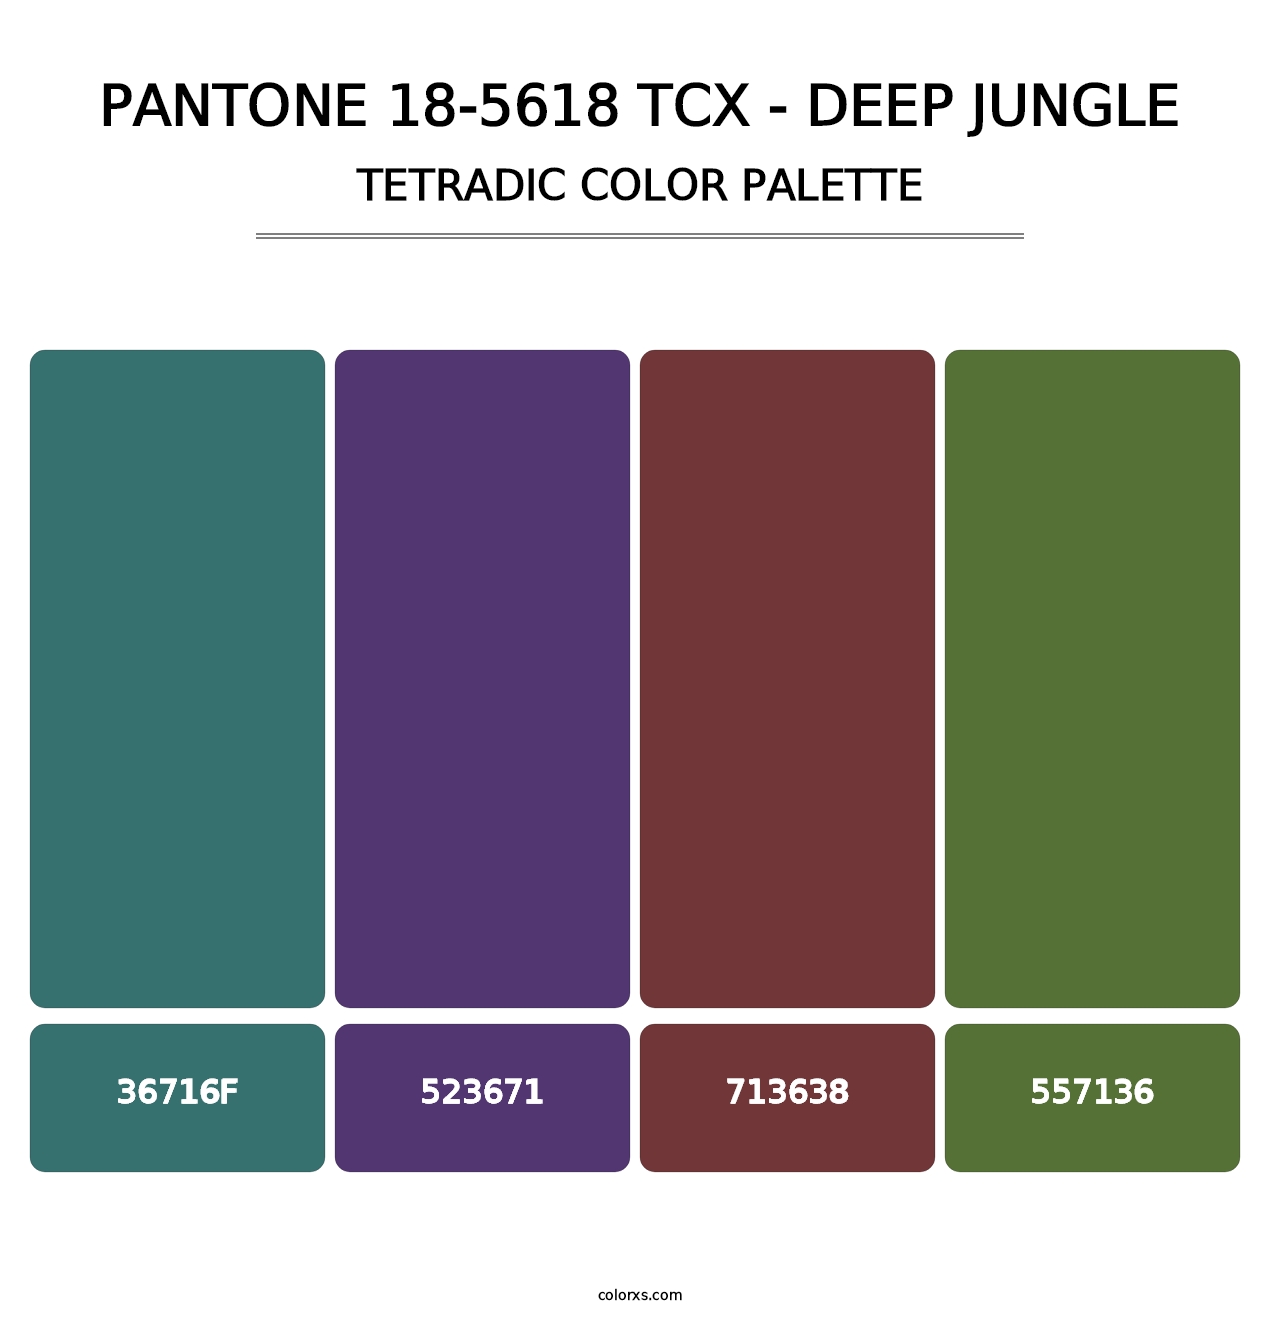 PANTONE 18-5618 TCX - Deep Jungle - Tetradic Color Palette